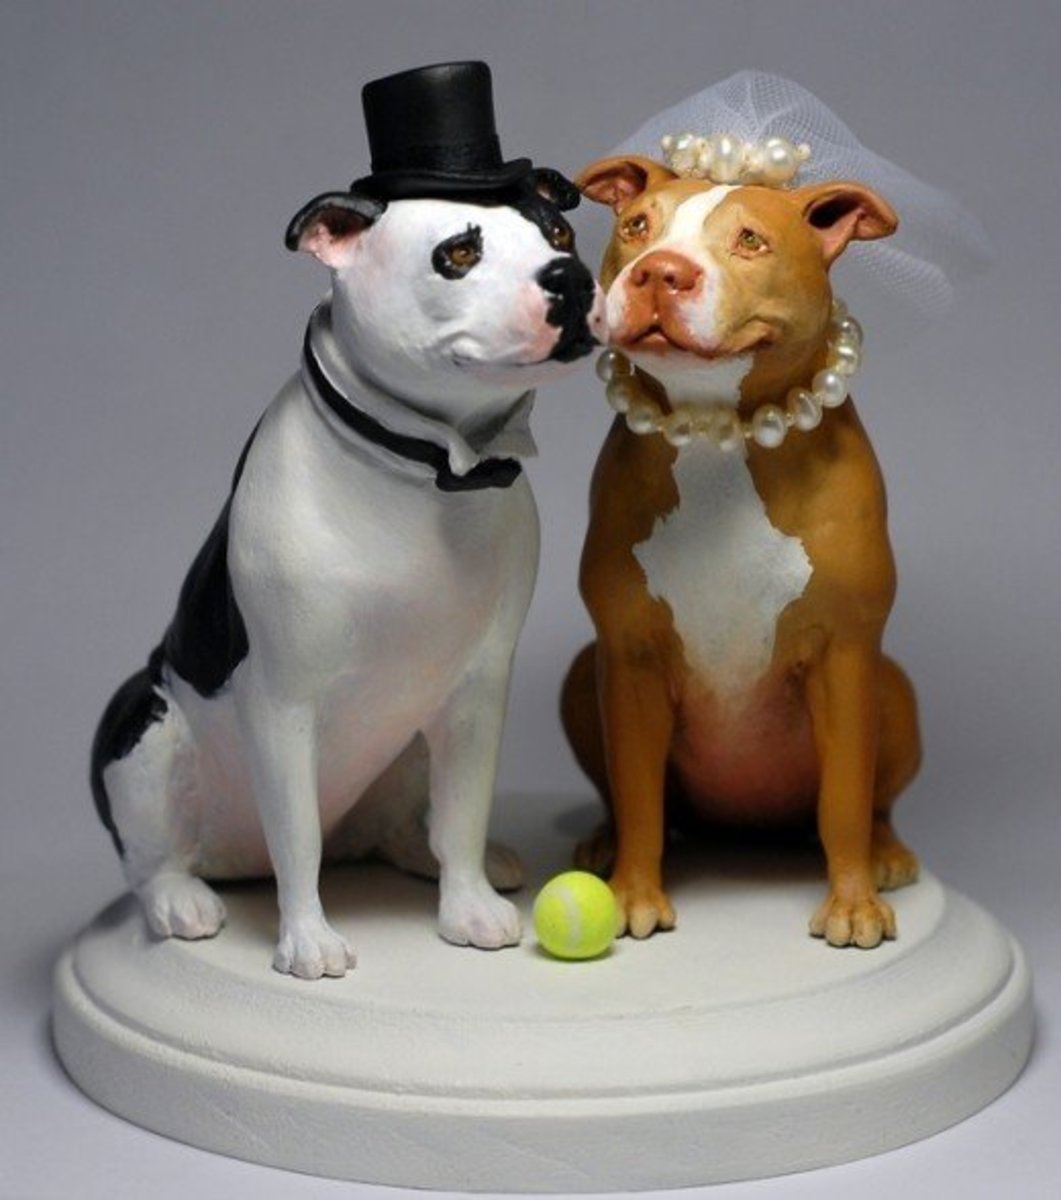 Animal themed wedding cakes